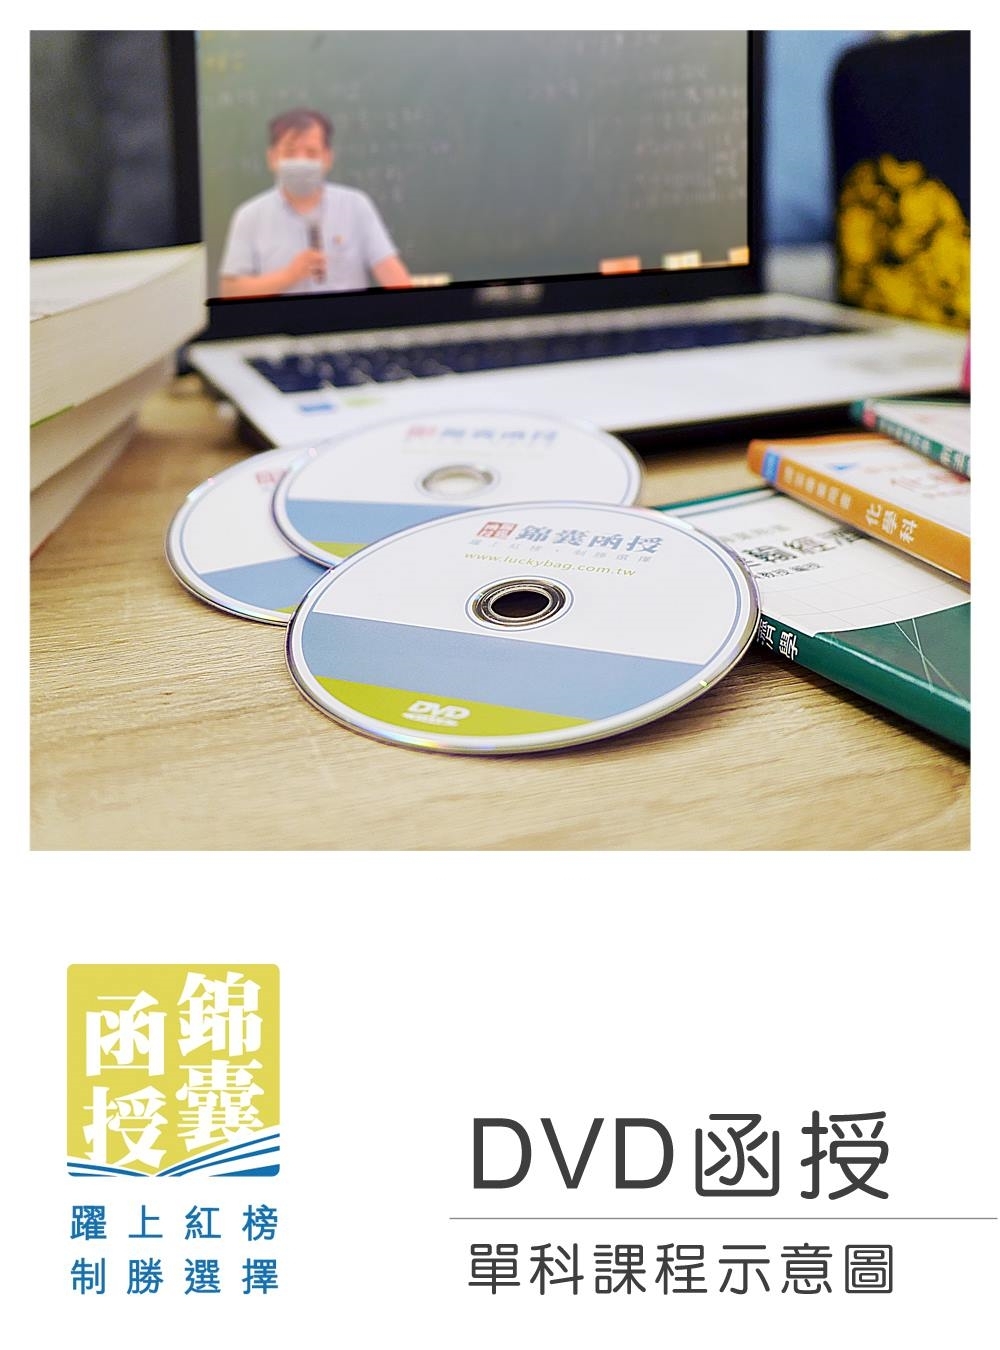 【DVD函授】法學大意-單科課程(111版)